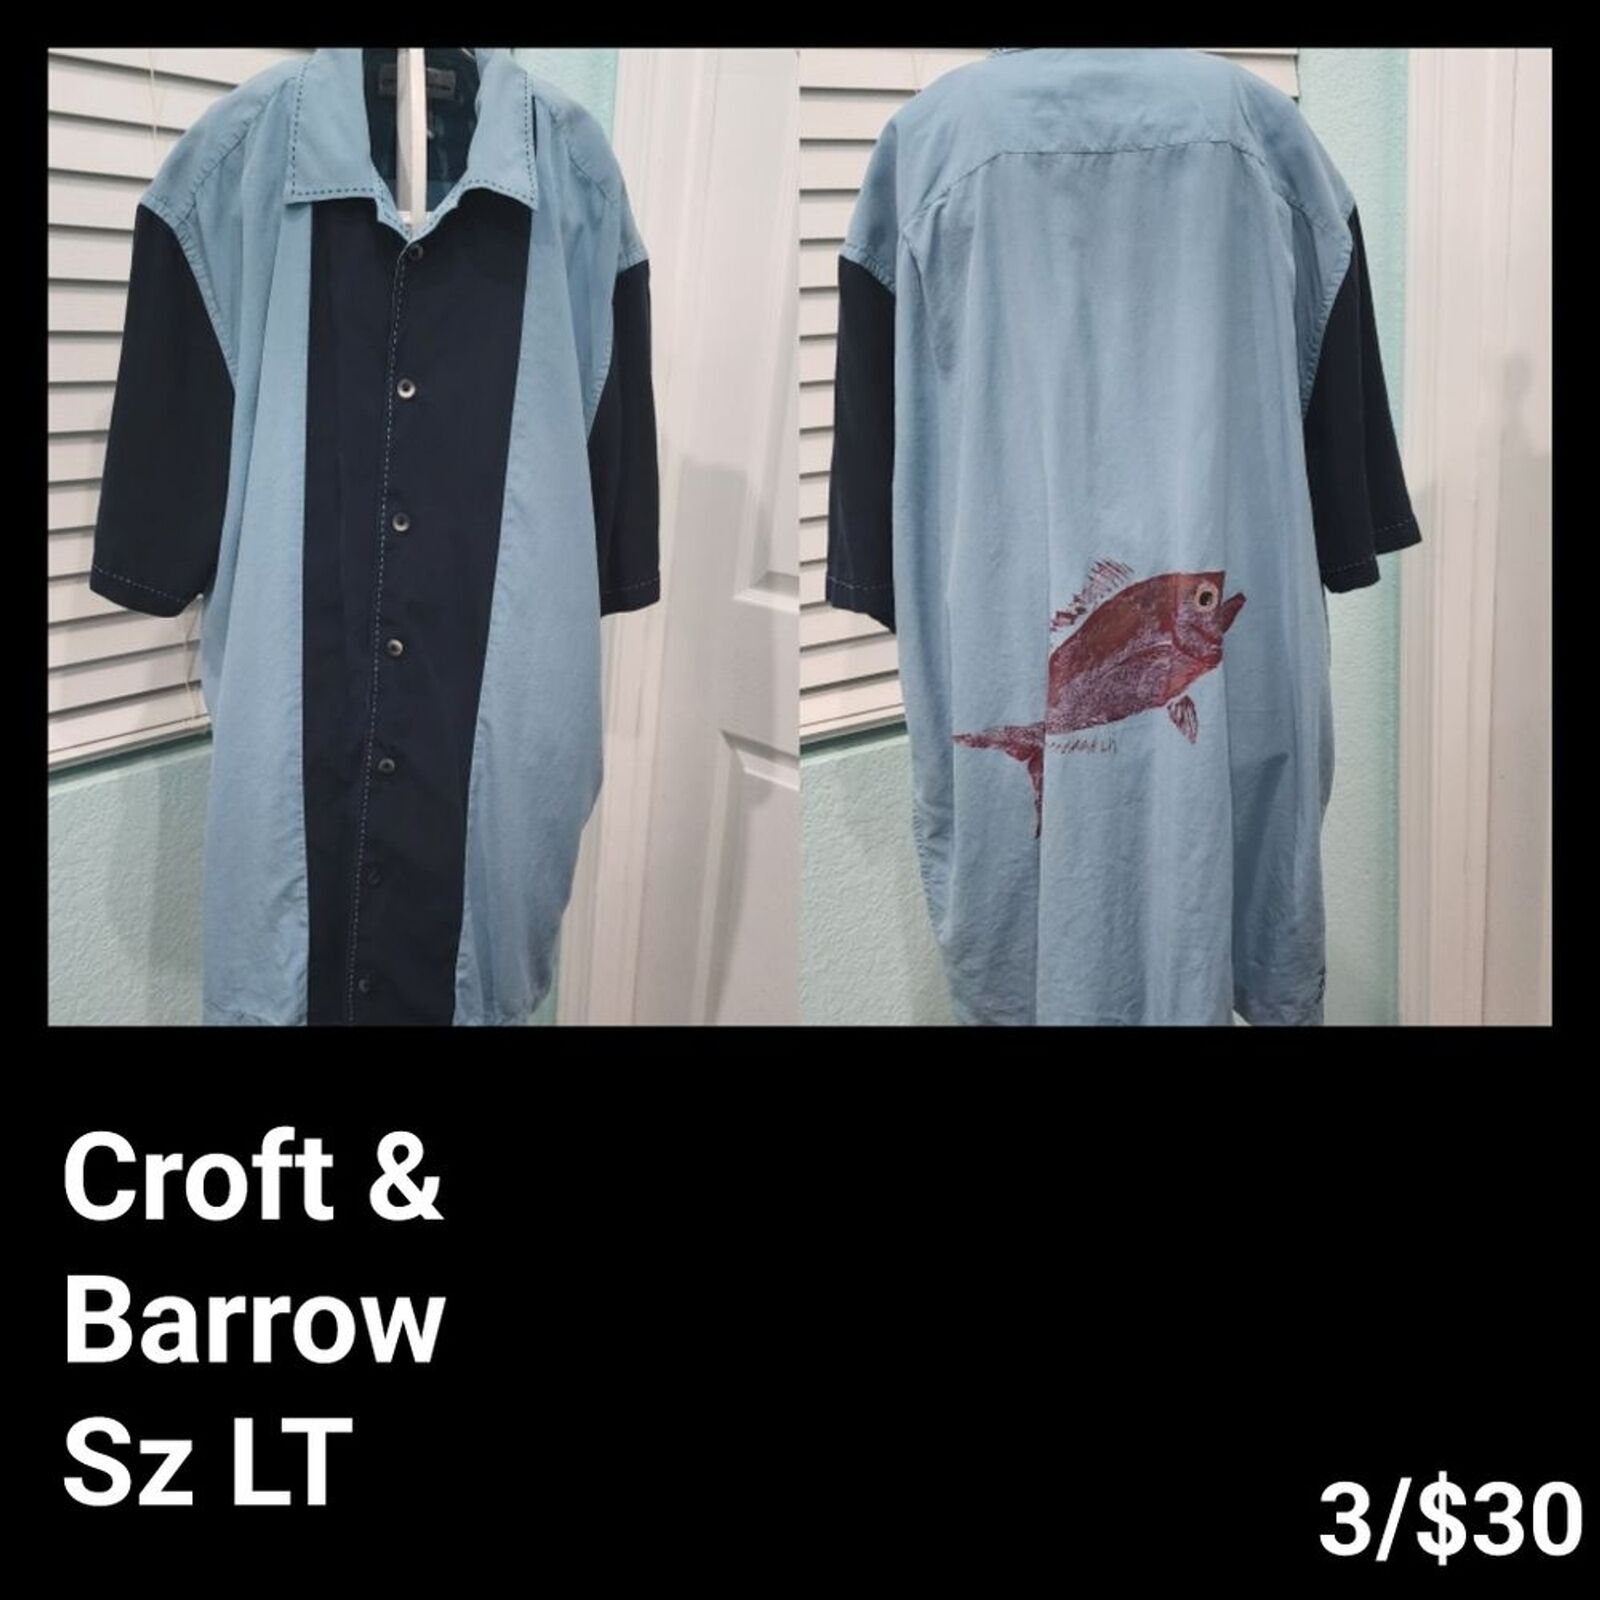 Croft & Barrow 100% Silk Blue Shirt w/ Fish Design Sz LT 3/$30